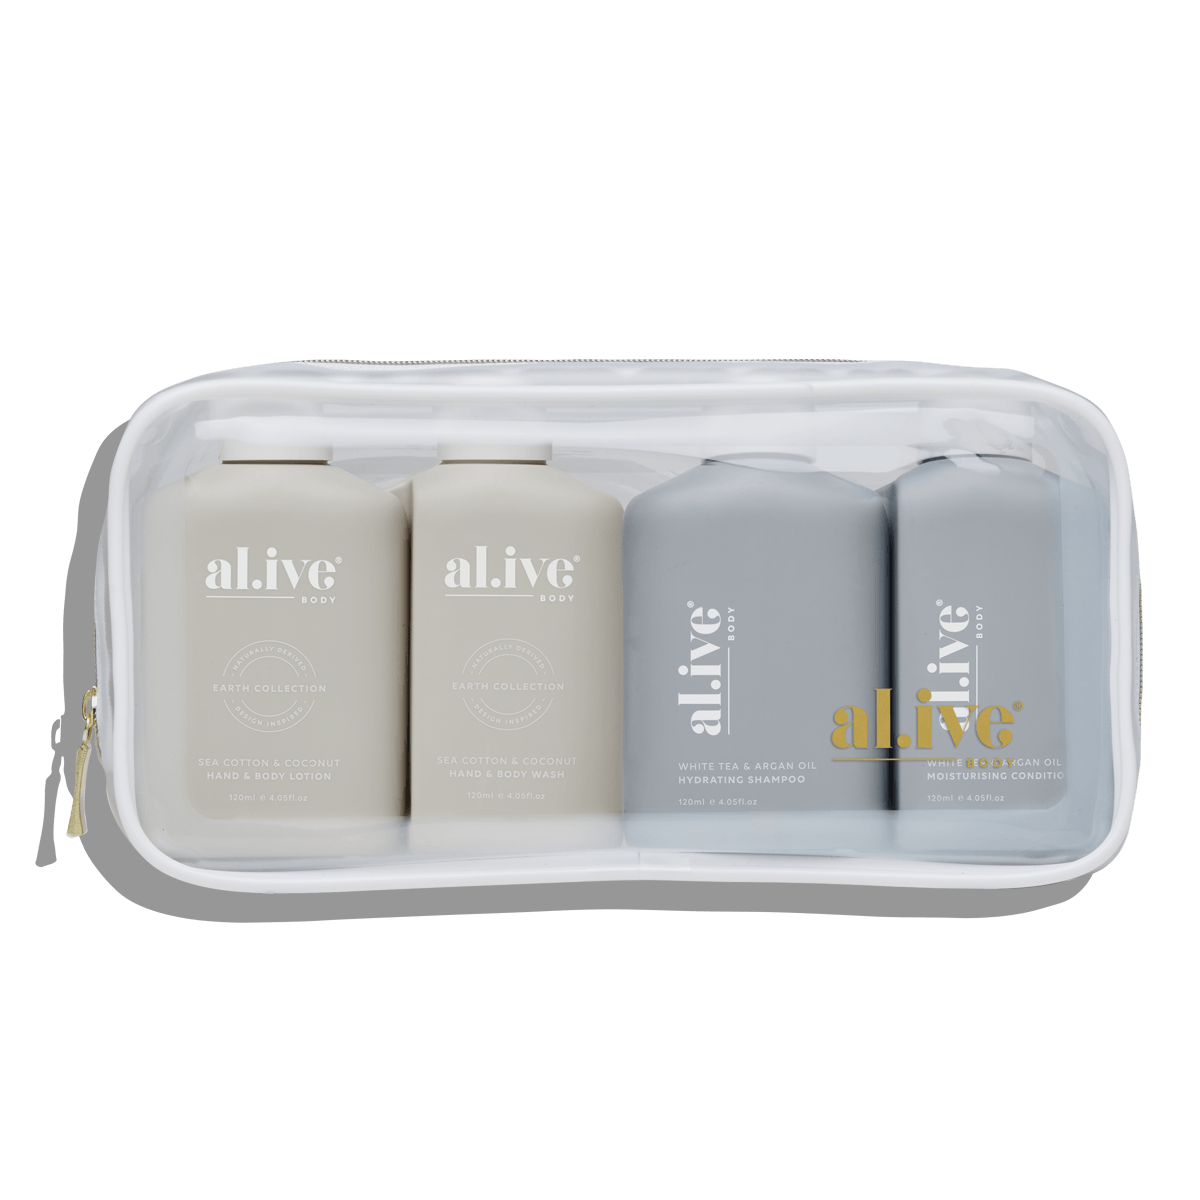 al.ive body - Hair &amp; Body Travel Pack